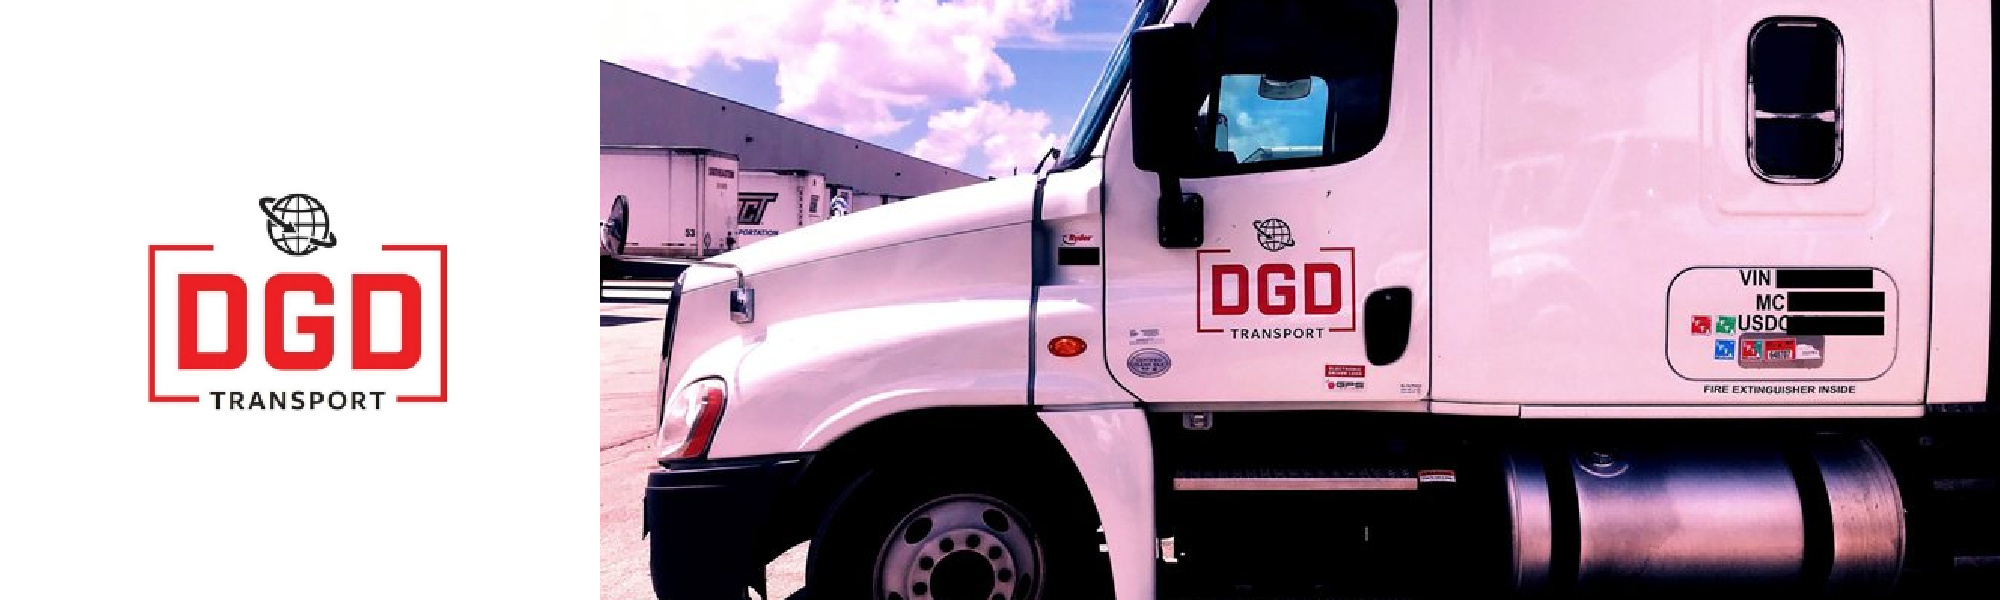 DGD Transport Go Freight Hub Group #gofreight #doxidonut